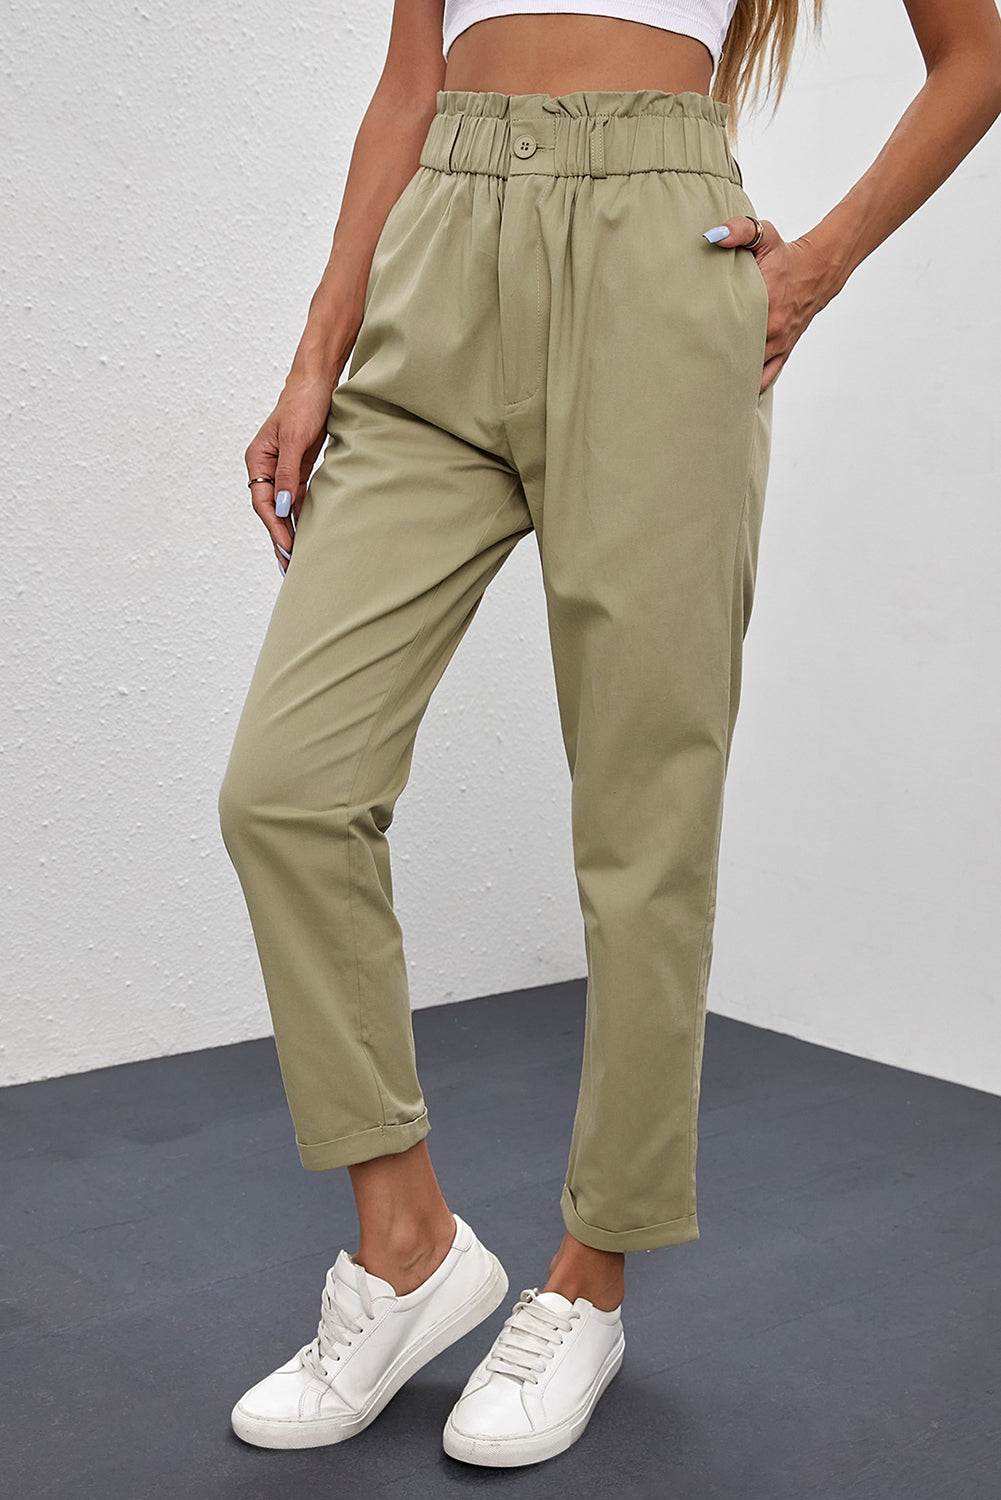 Pantalon Kaki Femme Taille Haute avec Poches